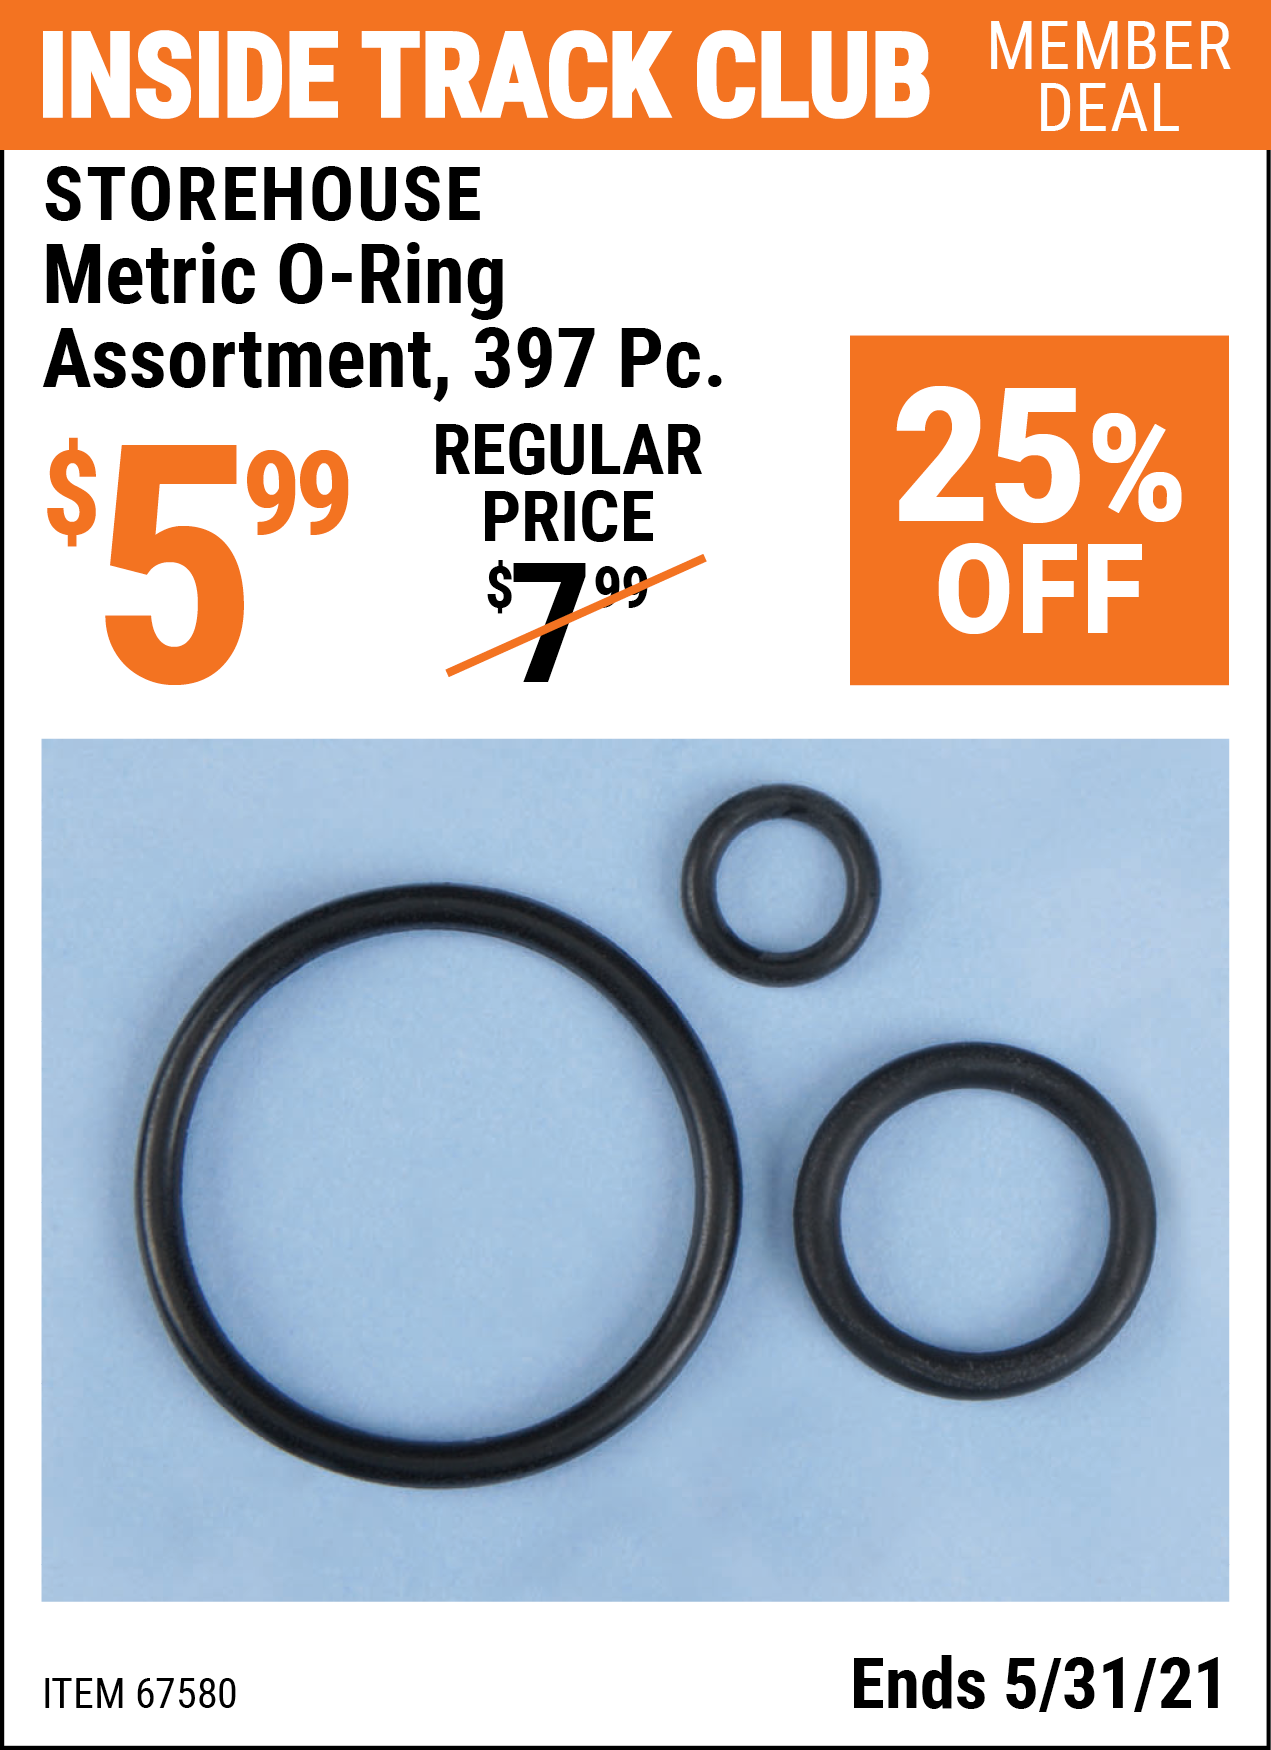 Metric O-Ring Assortment, 397 Piece